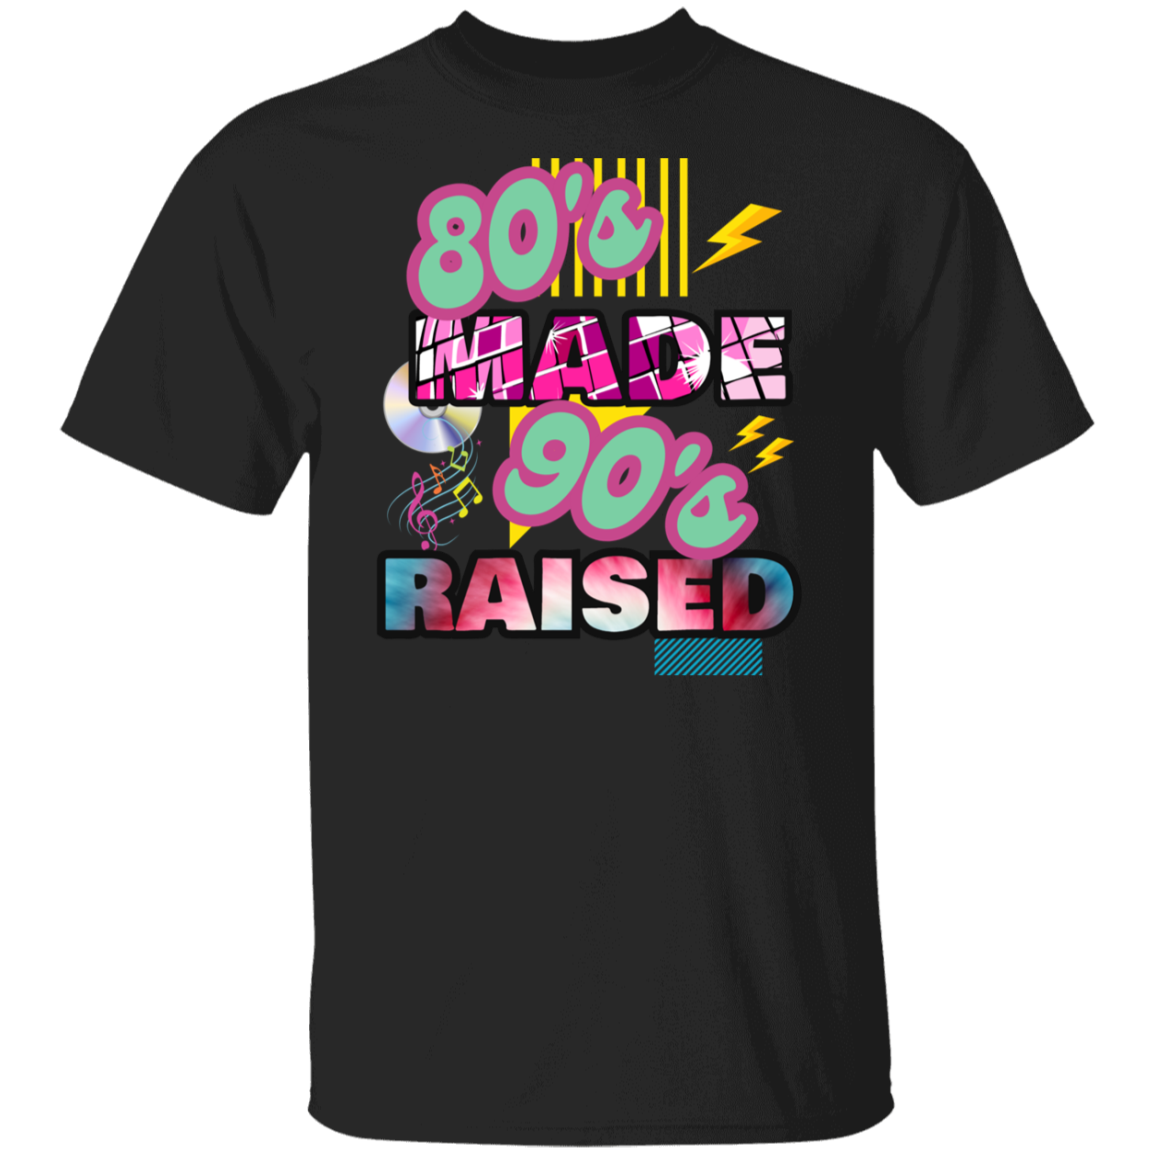 80'S MADE 90'S RAISED  5.3 oz. T-Shirt